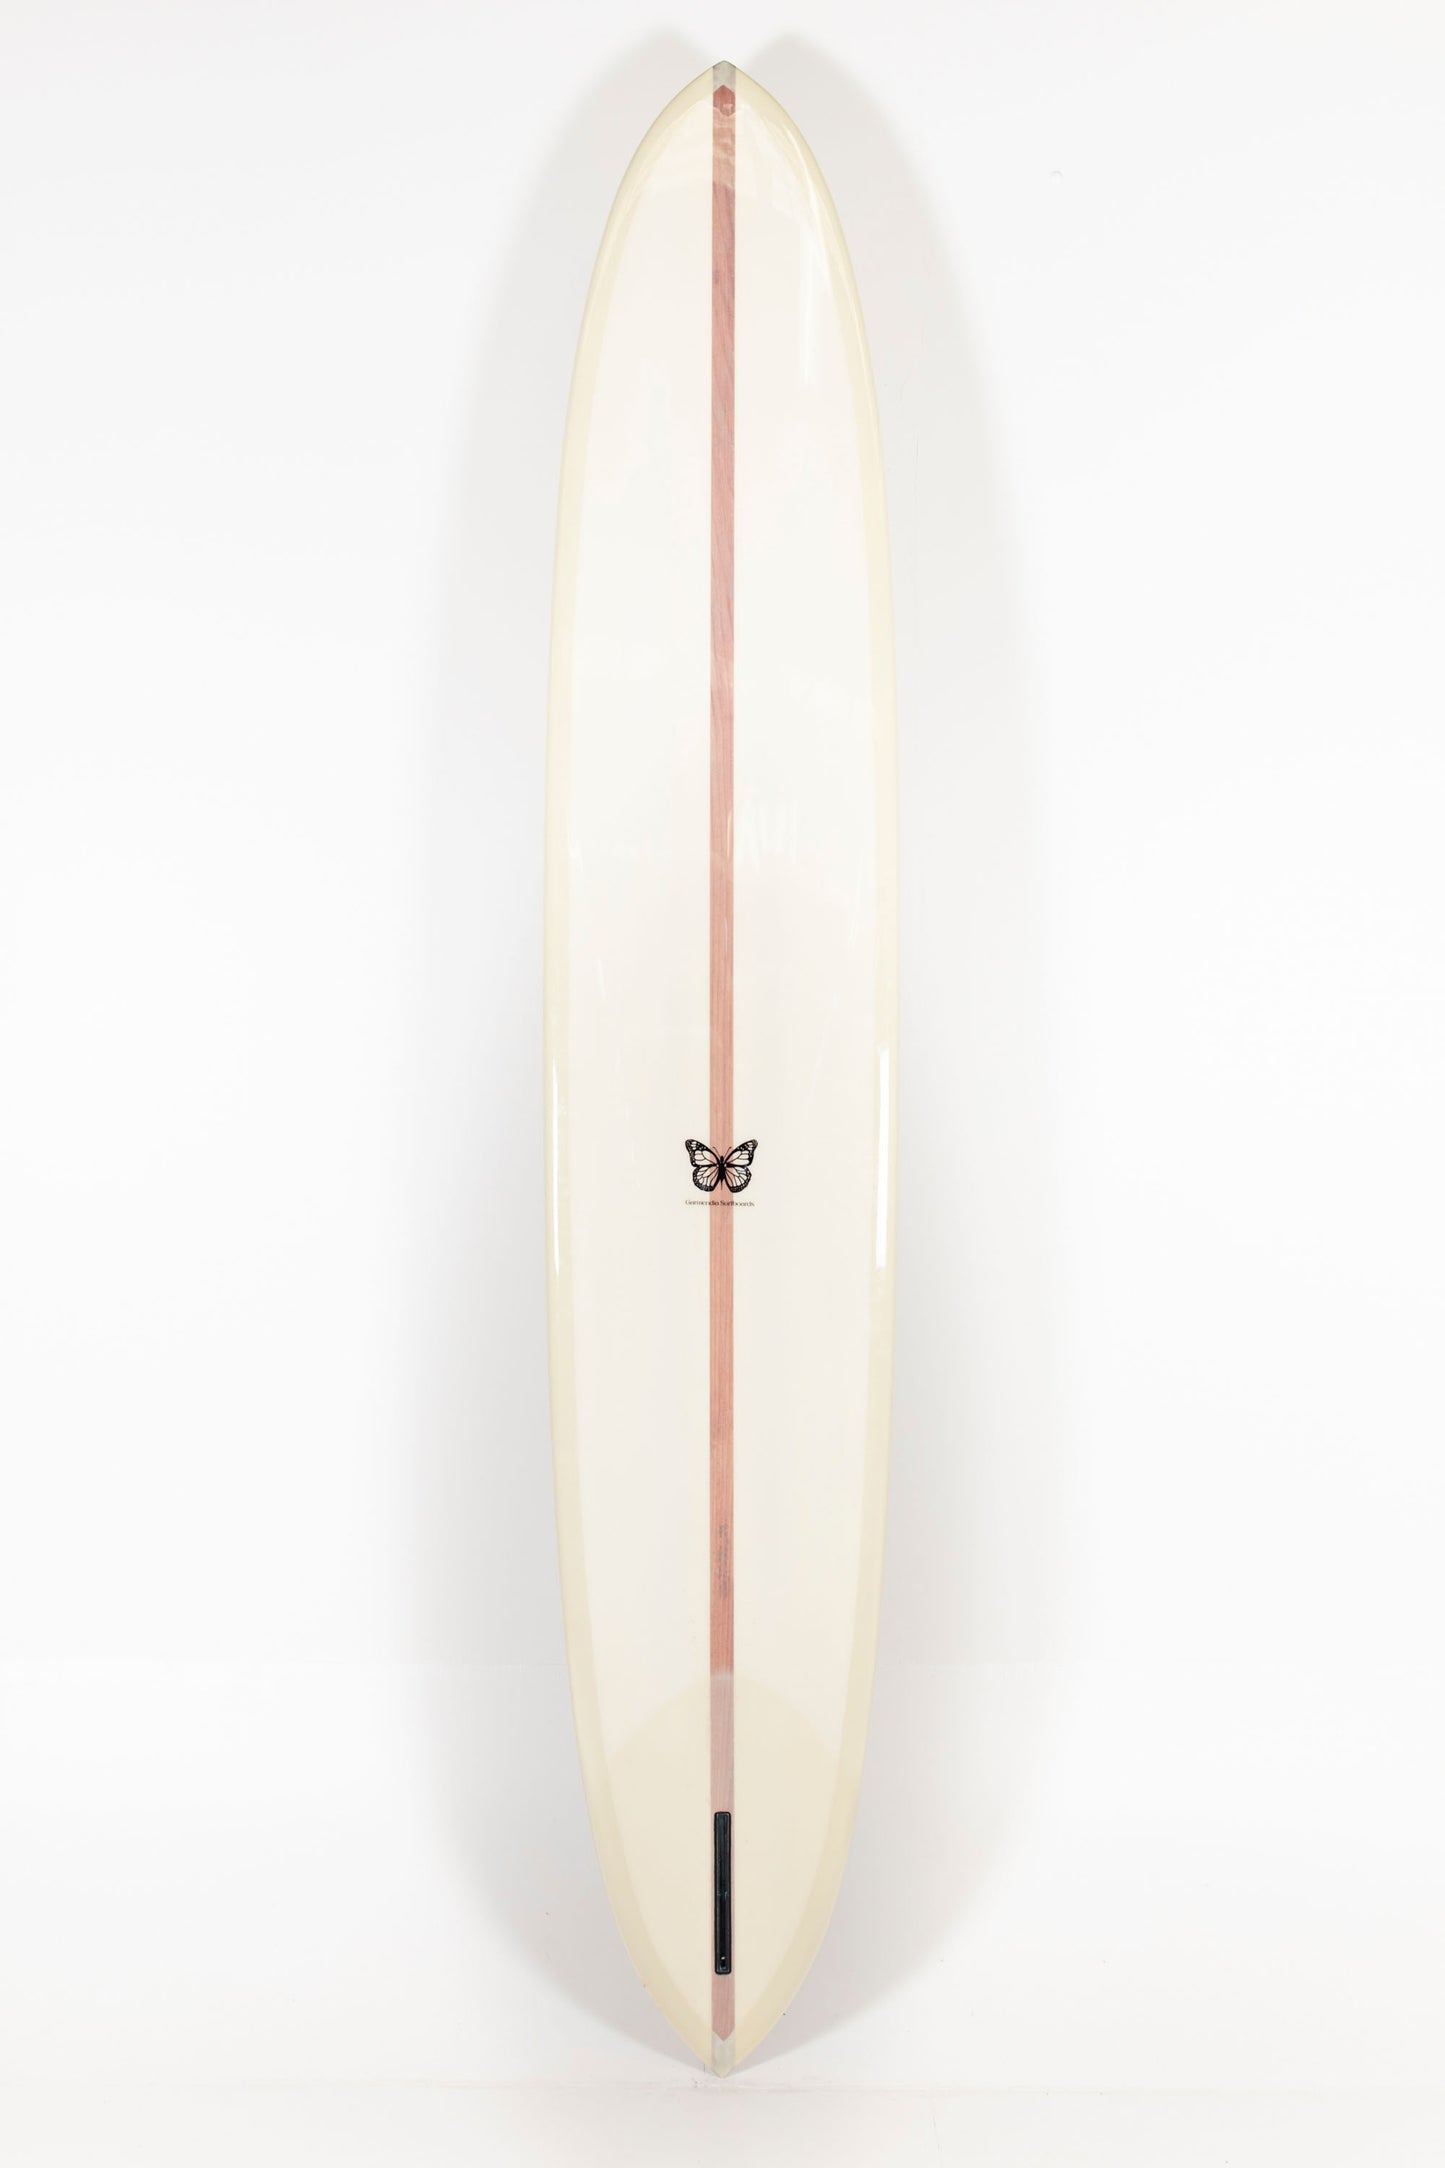 Pukas Surf Shop - Garmendia Surfboards - GLIDER DREAMER- 11'2" x 23 x 3 1/2